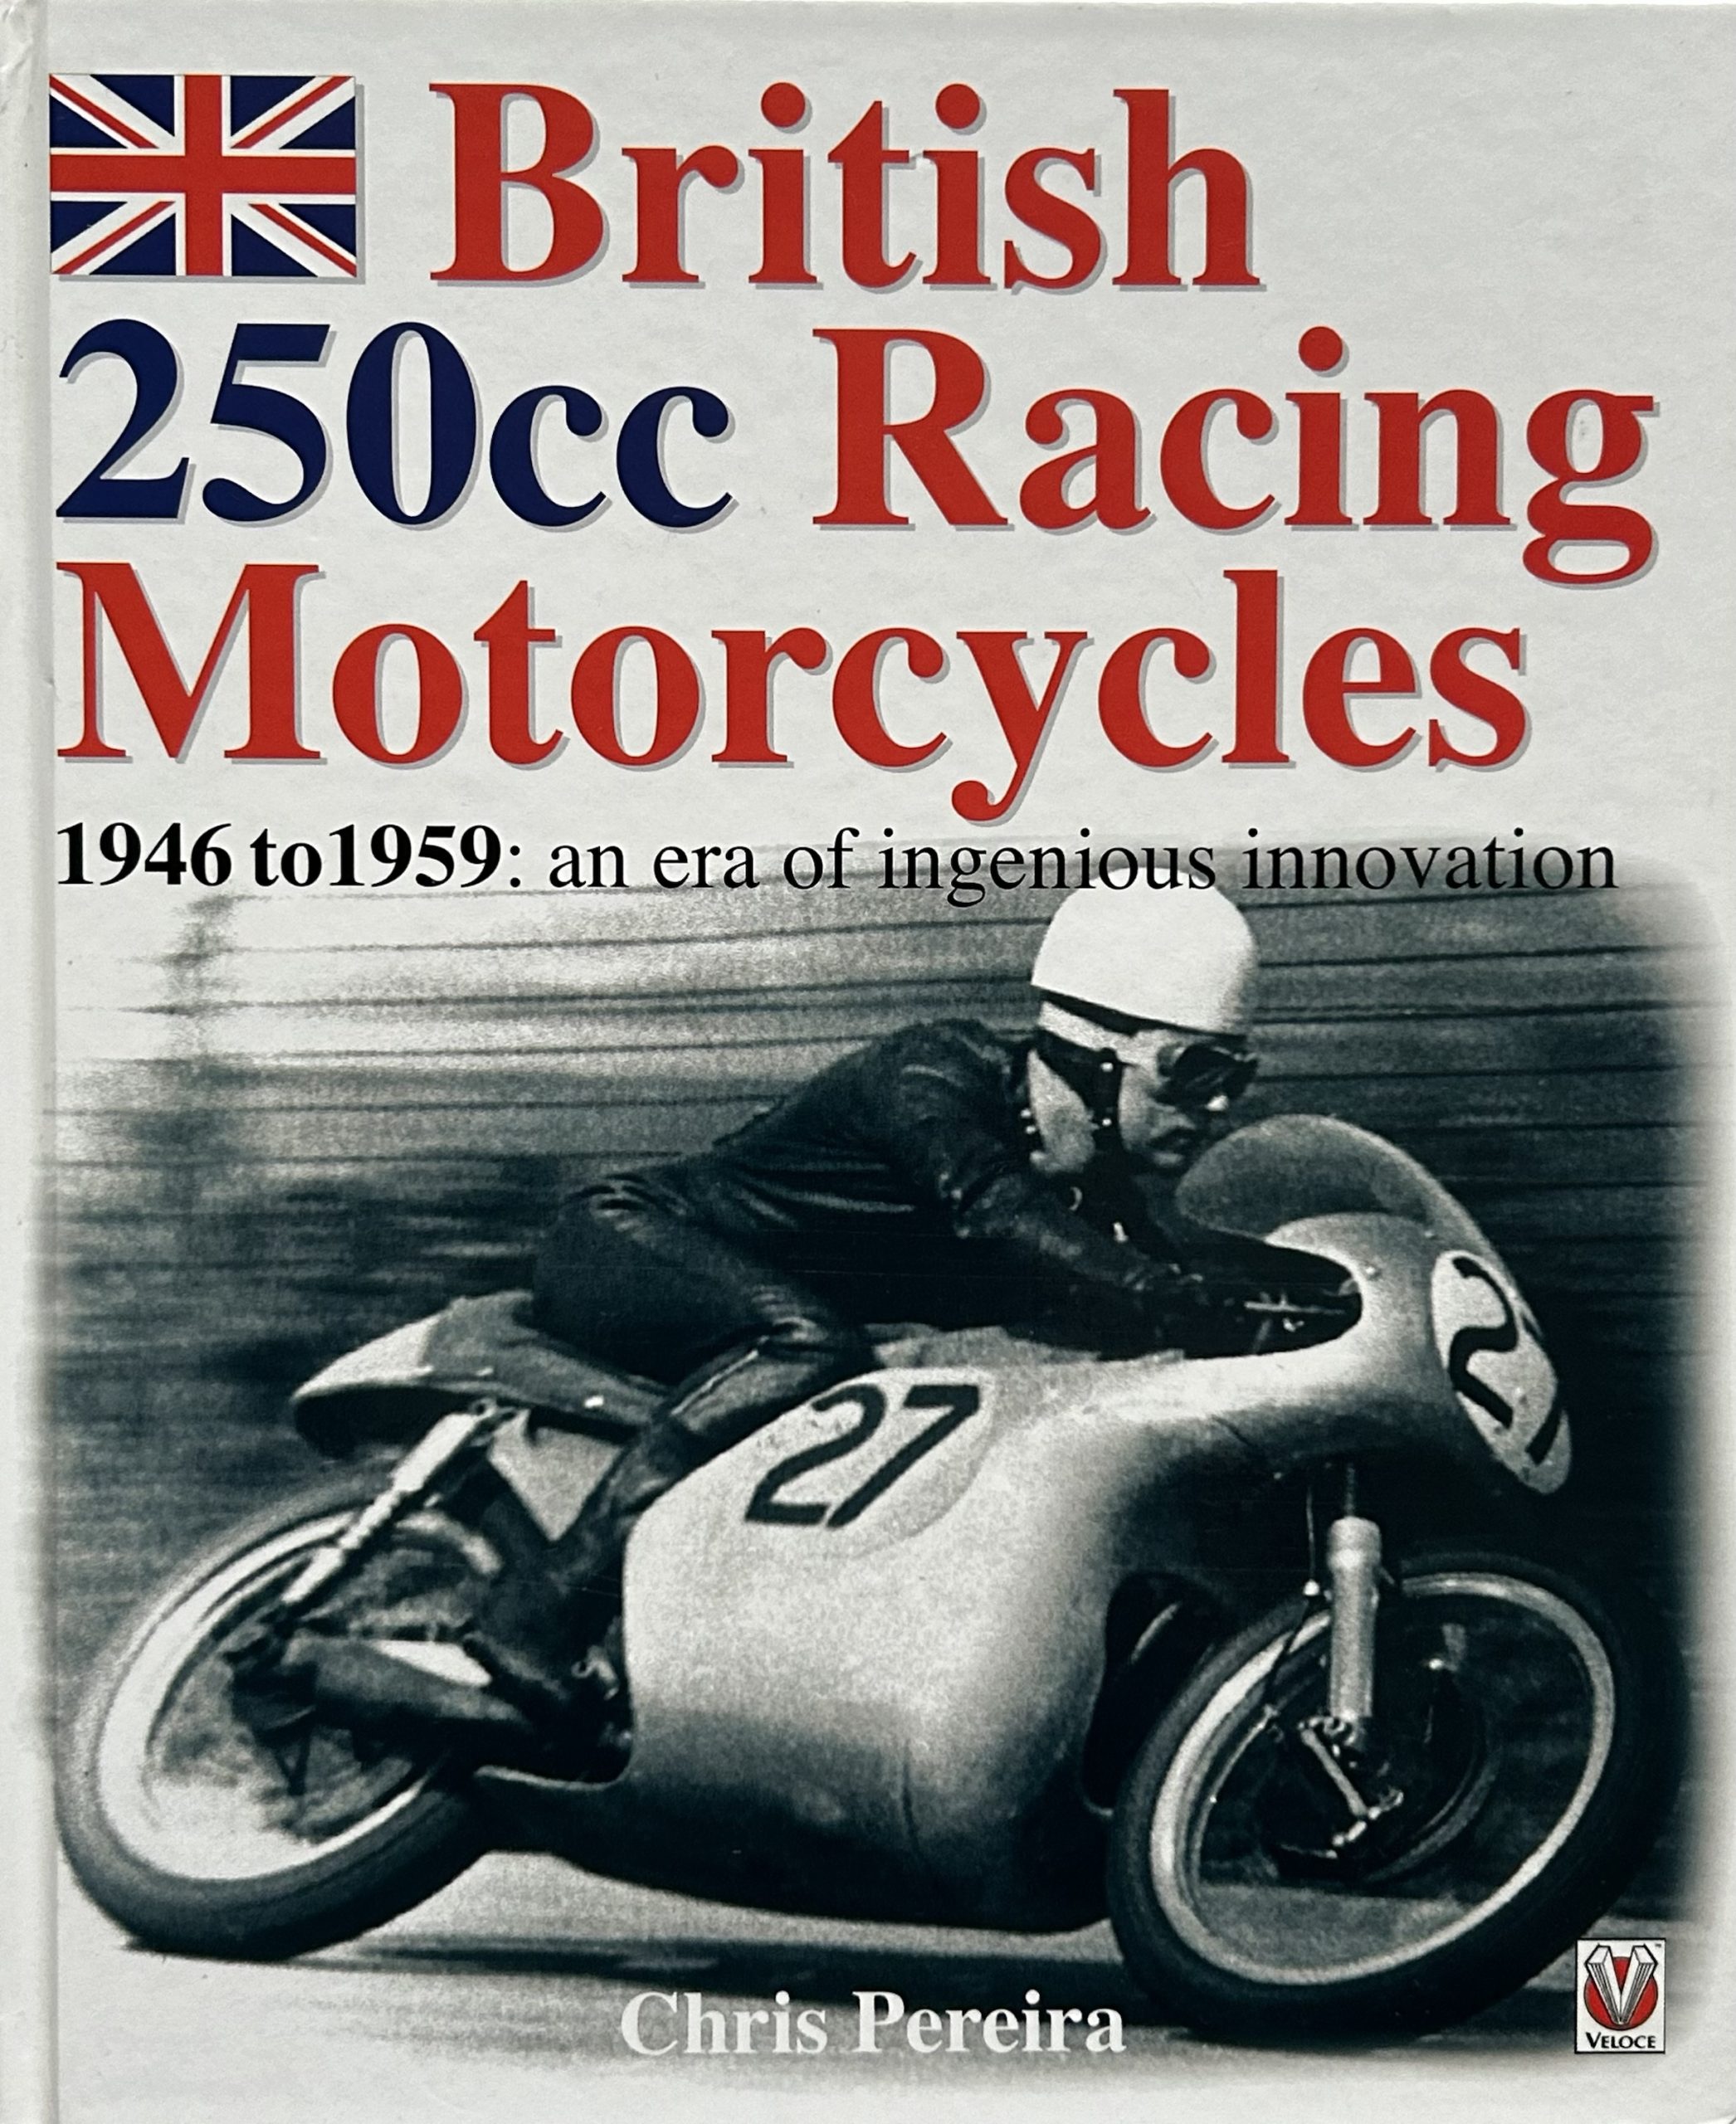 British 250cc Racing Motorcycles 1946-1959: An Era of Ingenious Innovation